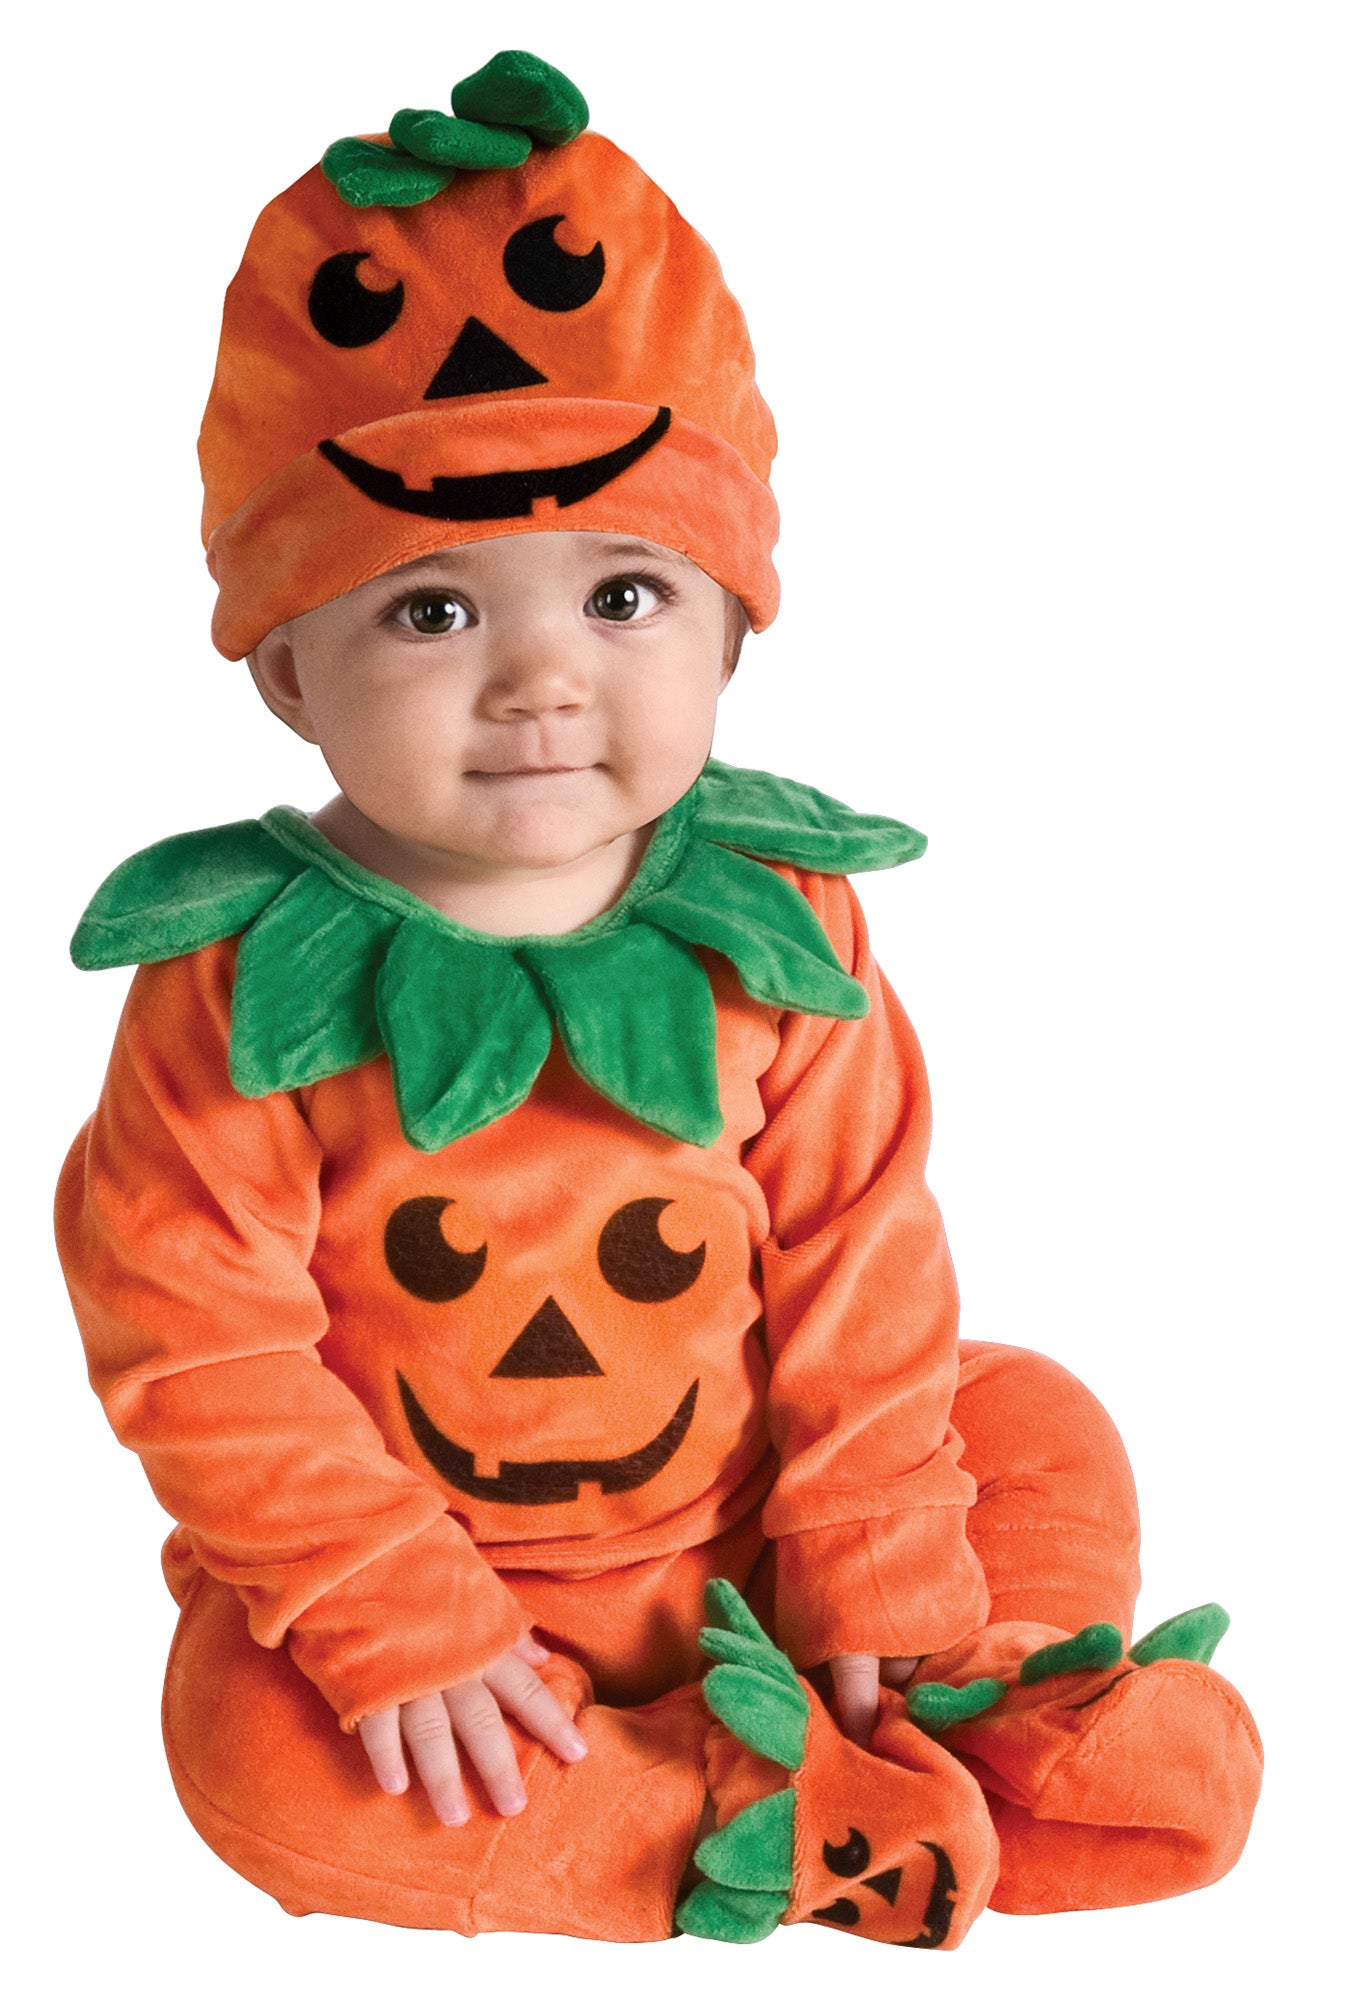 Toddlers Halloween Costume